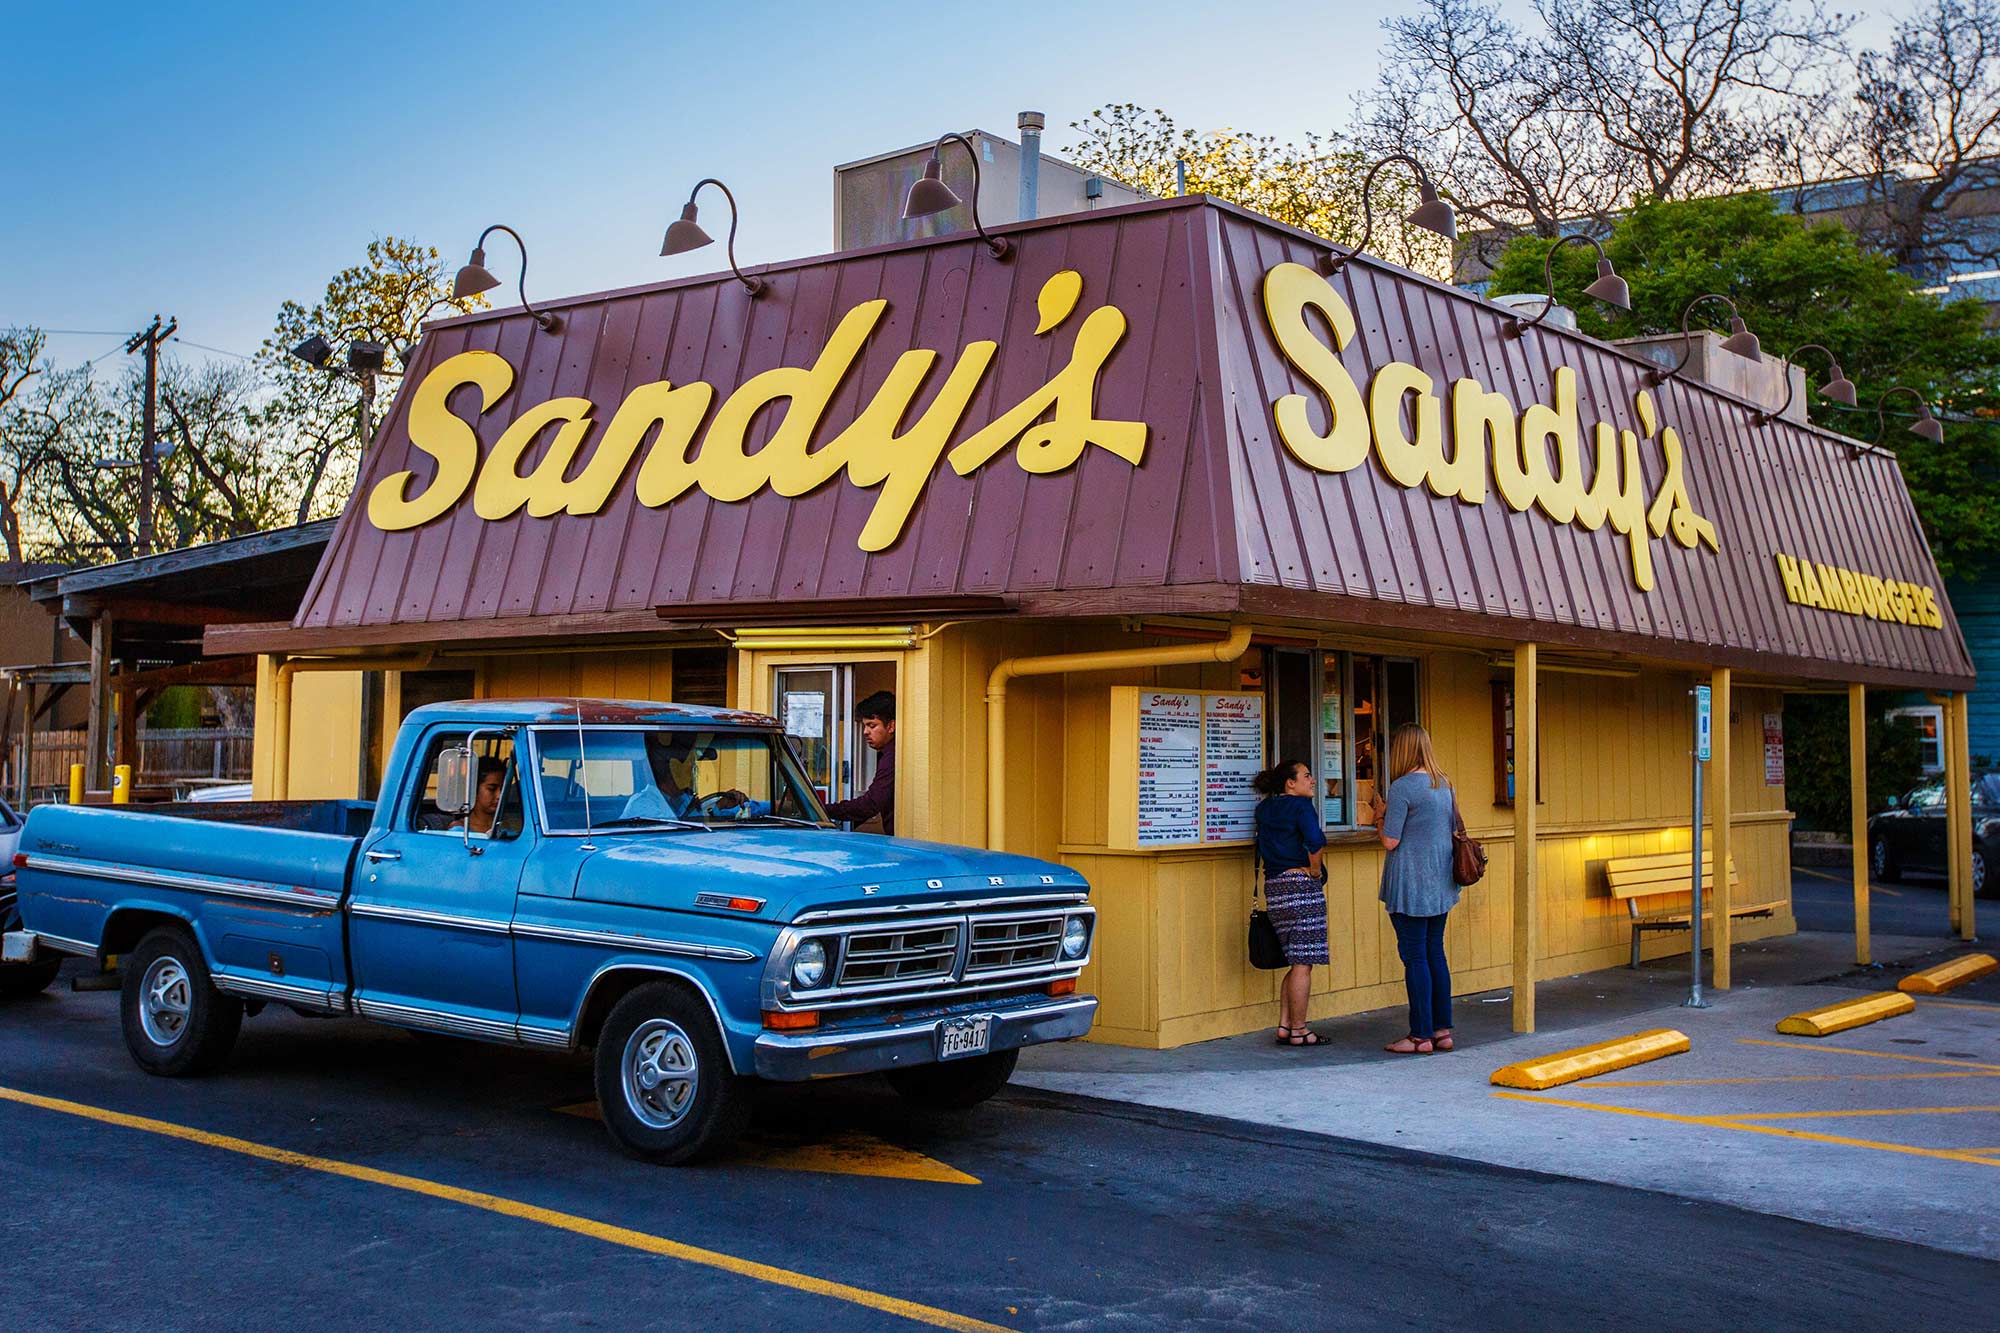 Sandy's Hamburgers, Austin, TX - 4/4